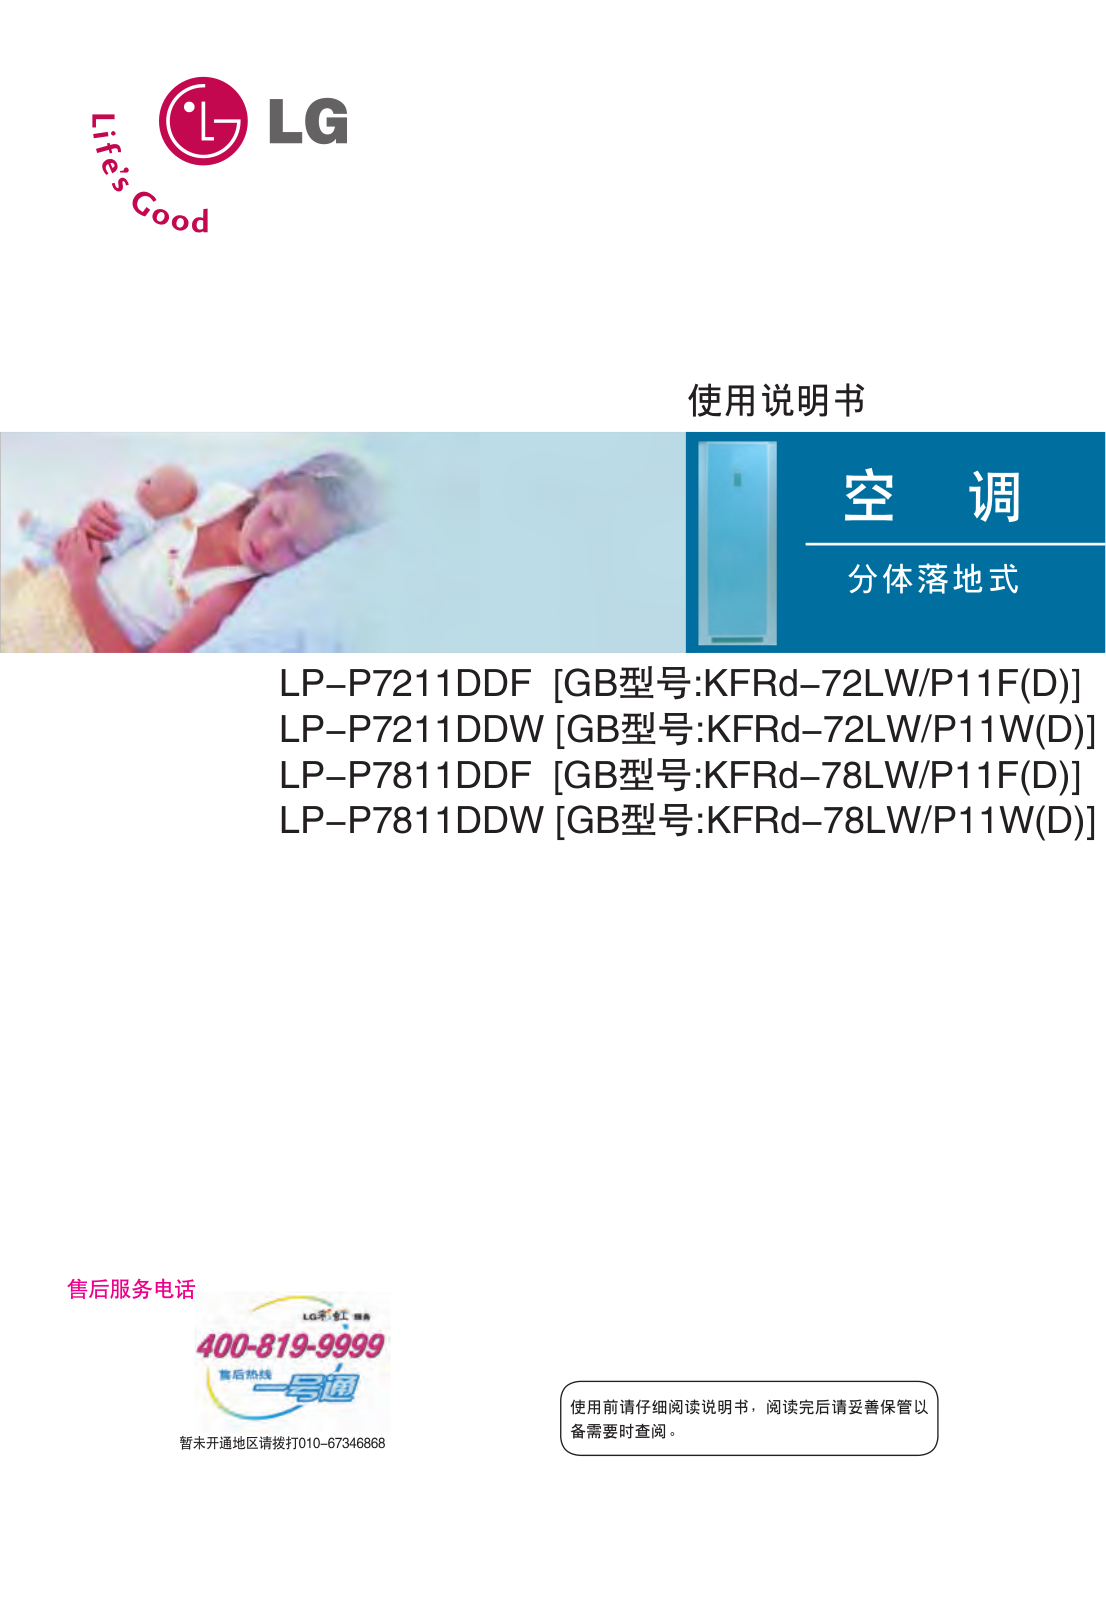 Lg LPUP72D, LPNP7211DDW, LPNP7811DDW, LPNP7811DDF, LPUP78D Manual